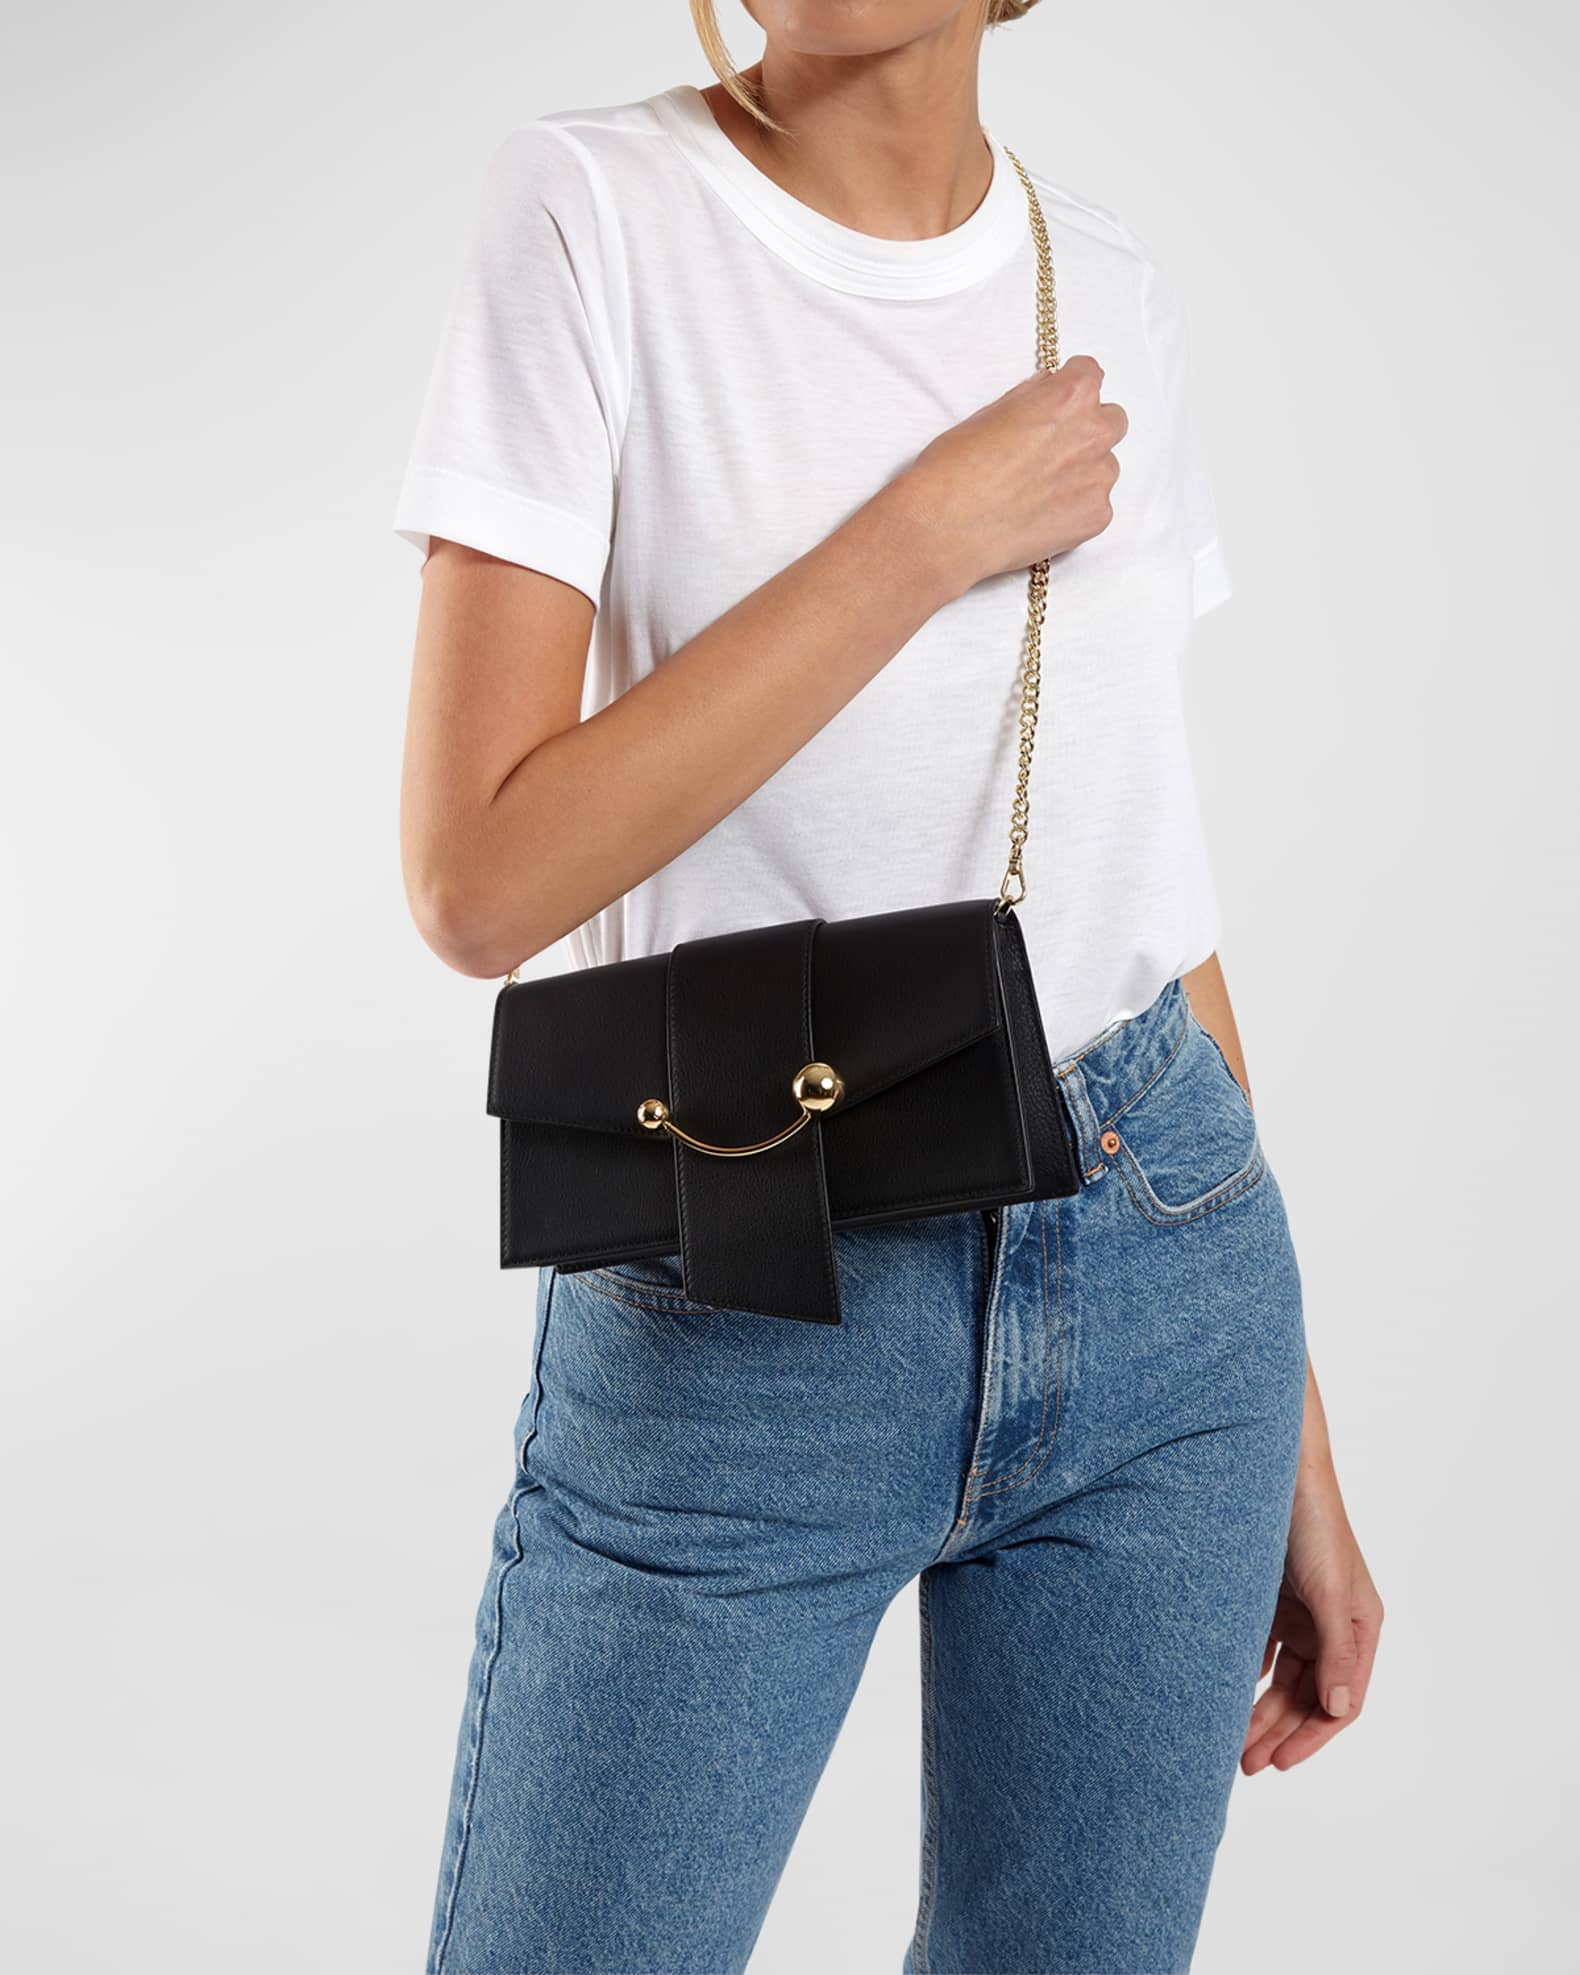 Strathberry Mini Crescent Leather Shoulder Bag